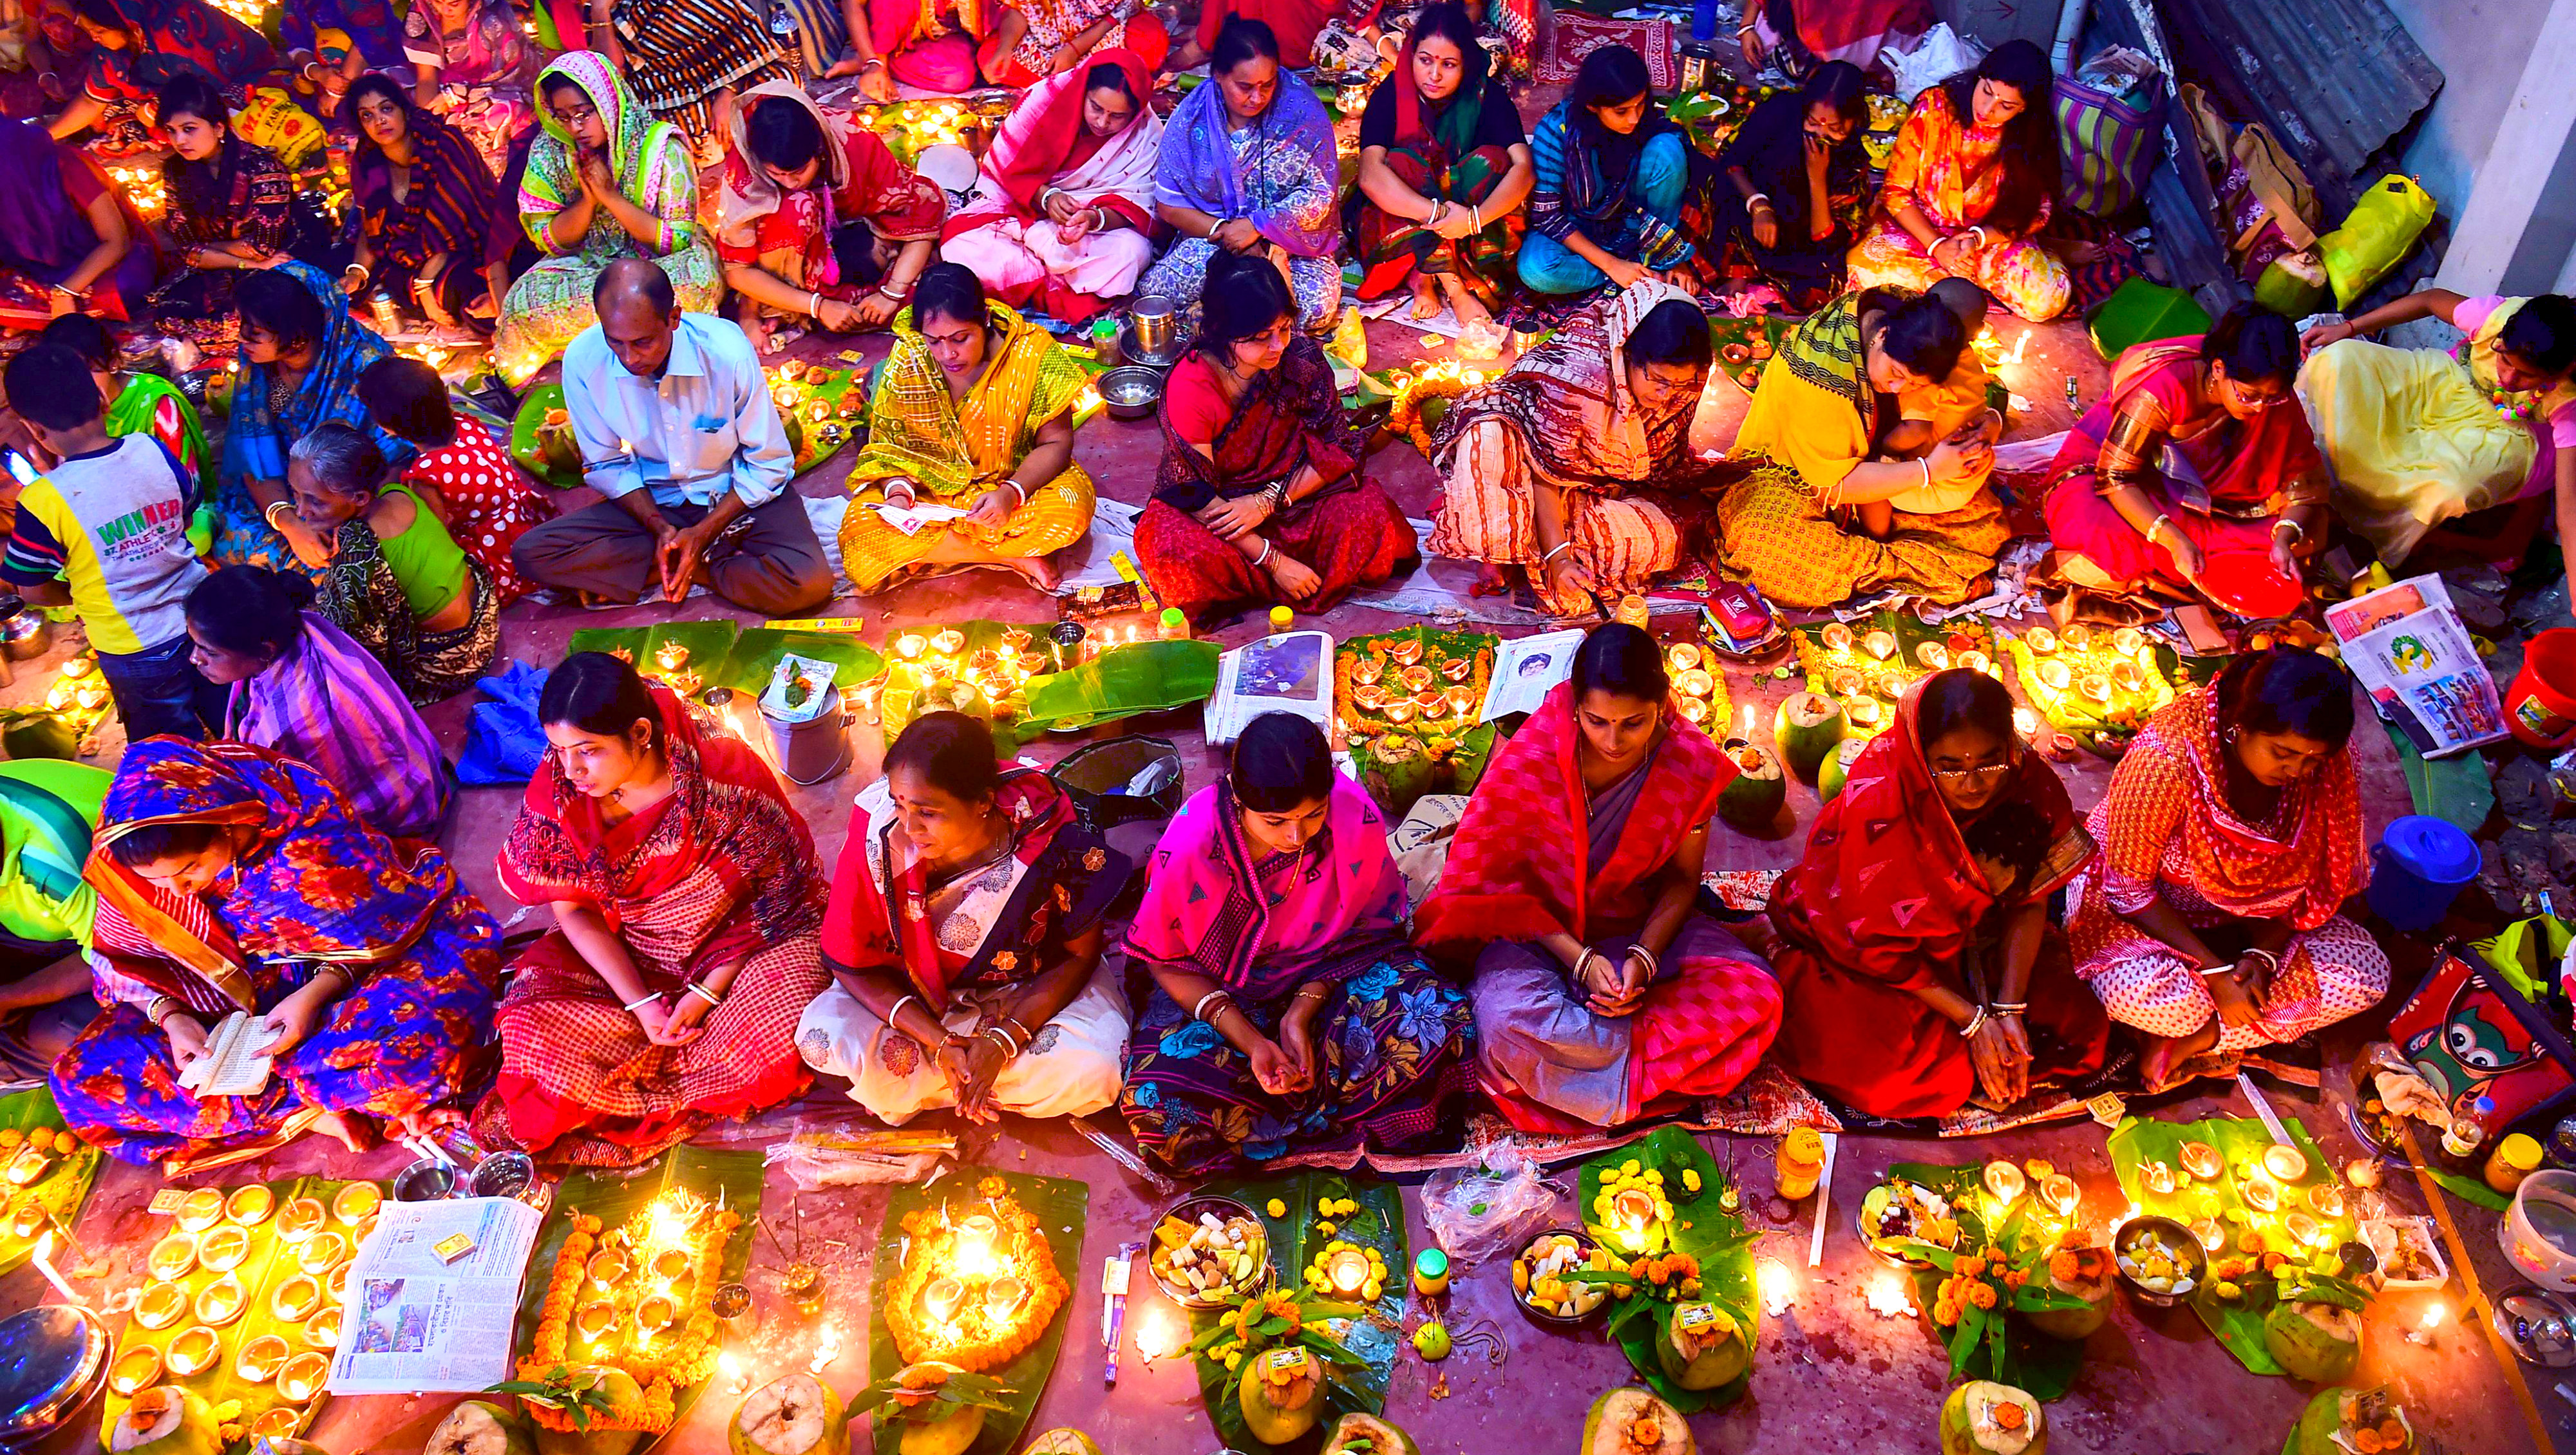 Hindu devotees in Dhaka offer prayers as they prepare to break their fast during the Rakher Updbas festival